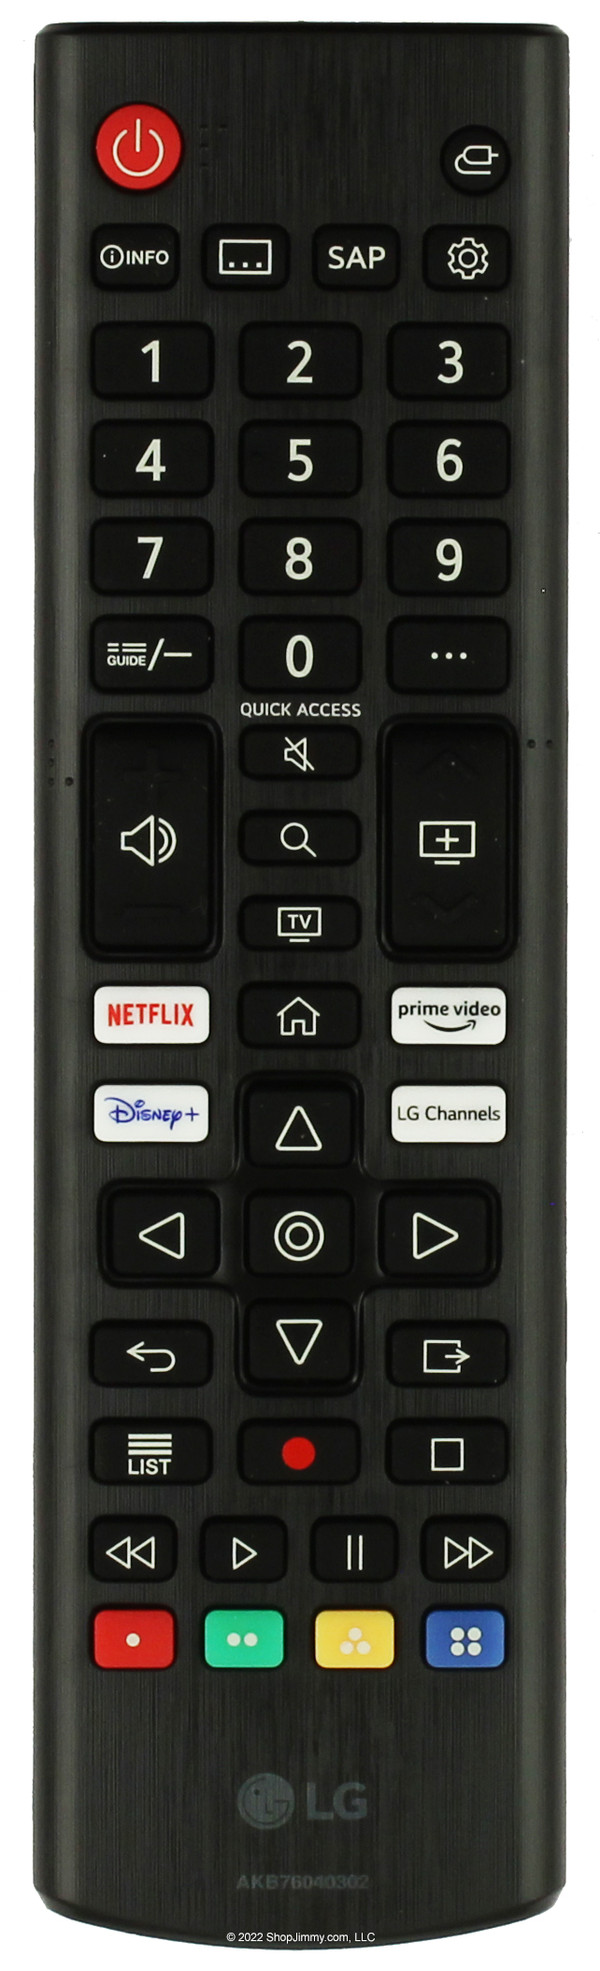 LG AKB76040302 LED TV Remote Control OEM ORIGINAL